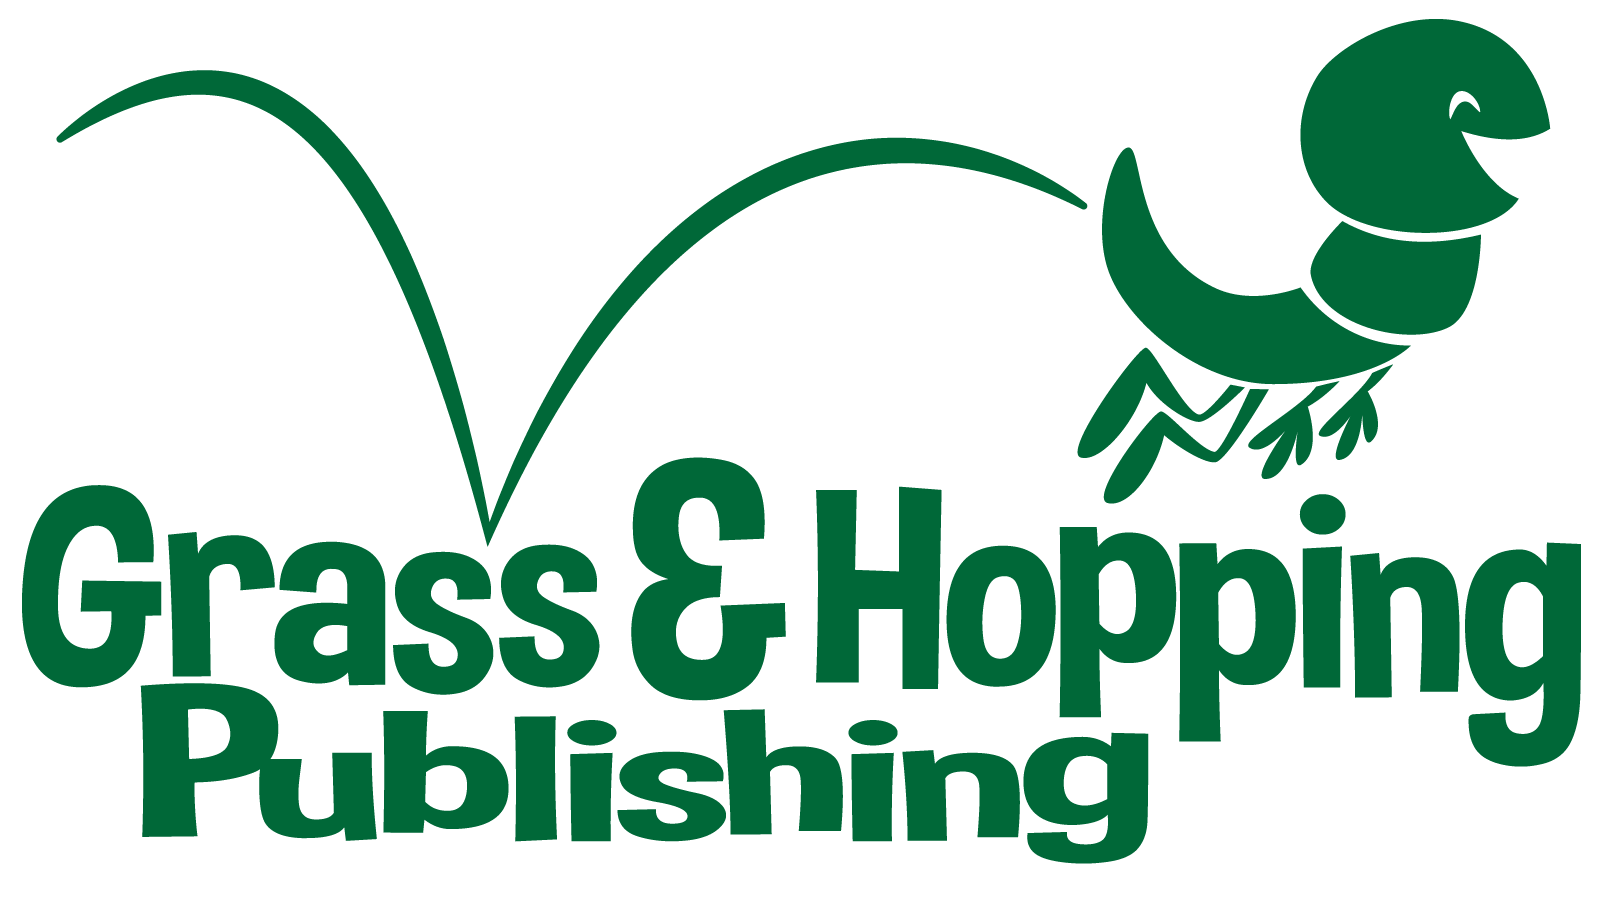 Grass &amp; Hopping Publishing